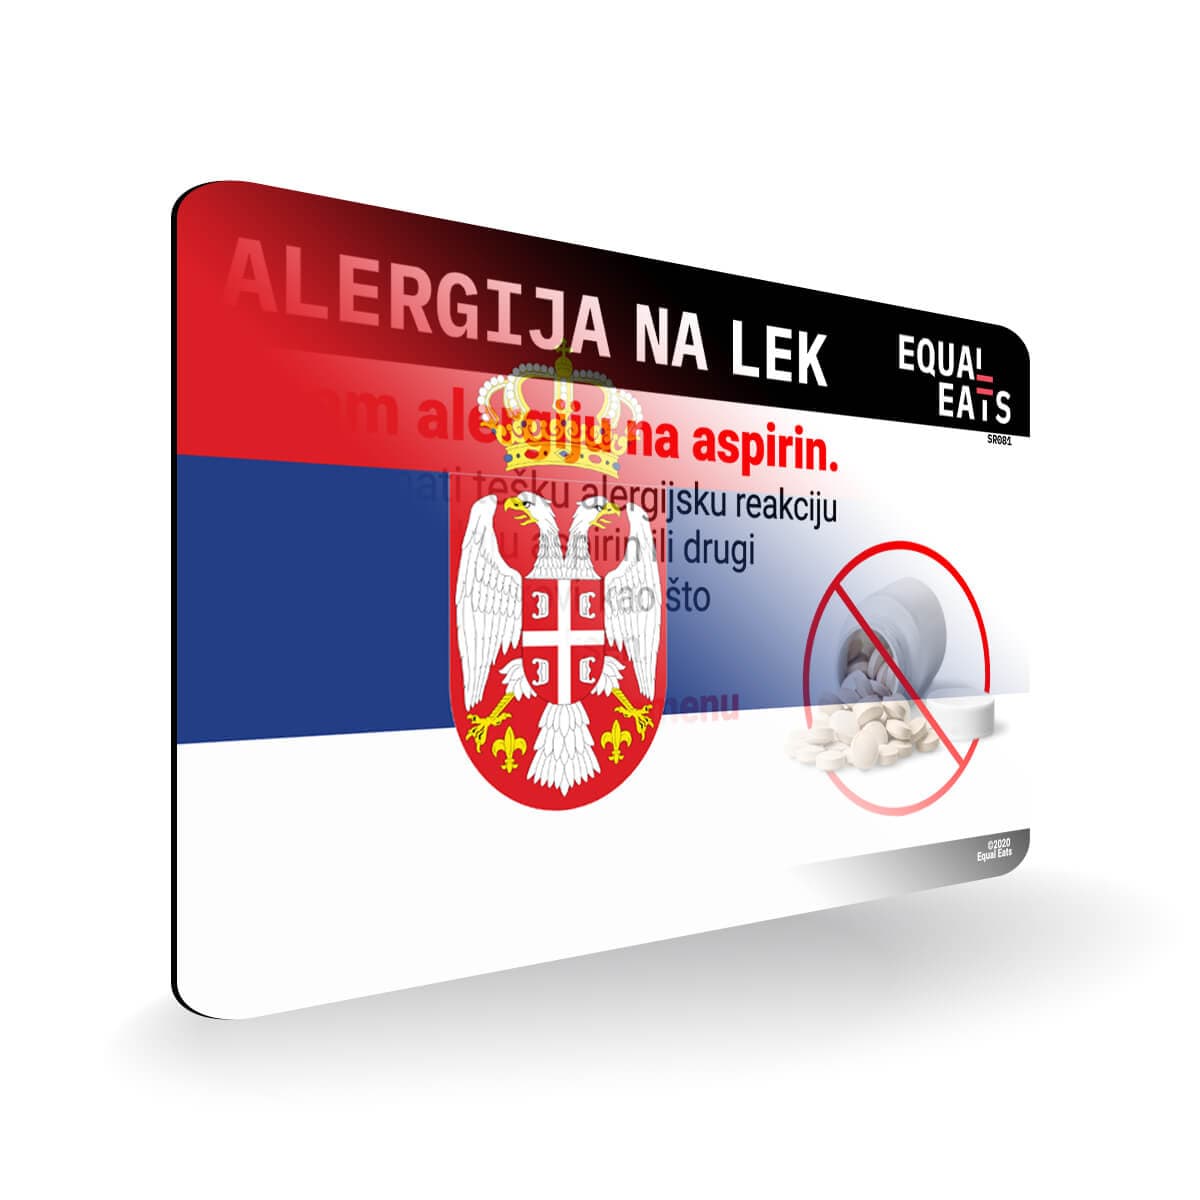 Aspirin Allergy in Serbian. Aspirin medical I.D. Card for Serbia